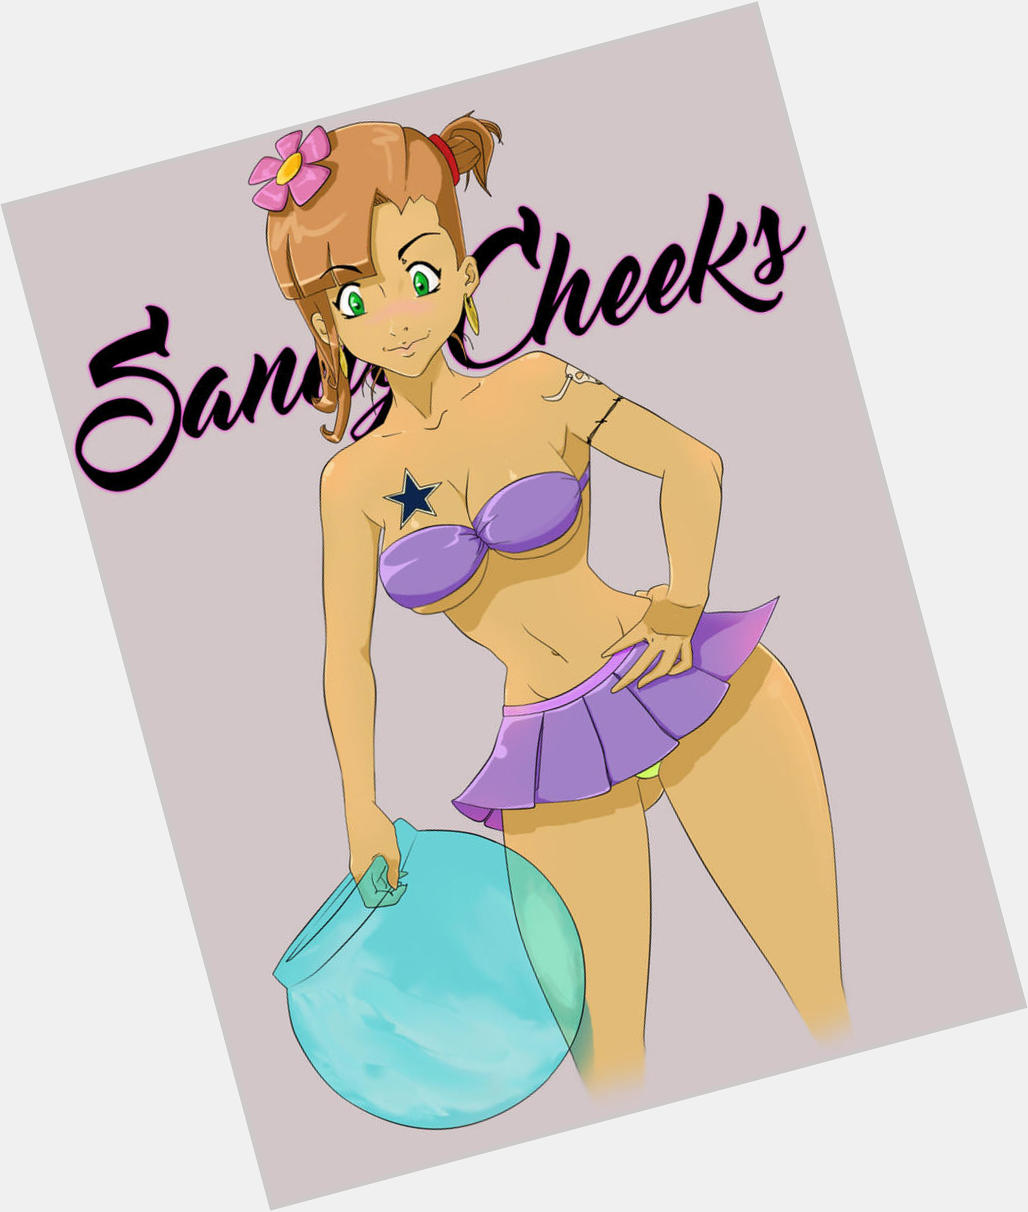 Sandy Cheeks dating 6.jpg